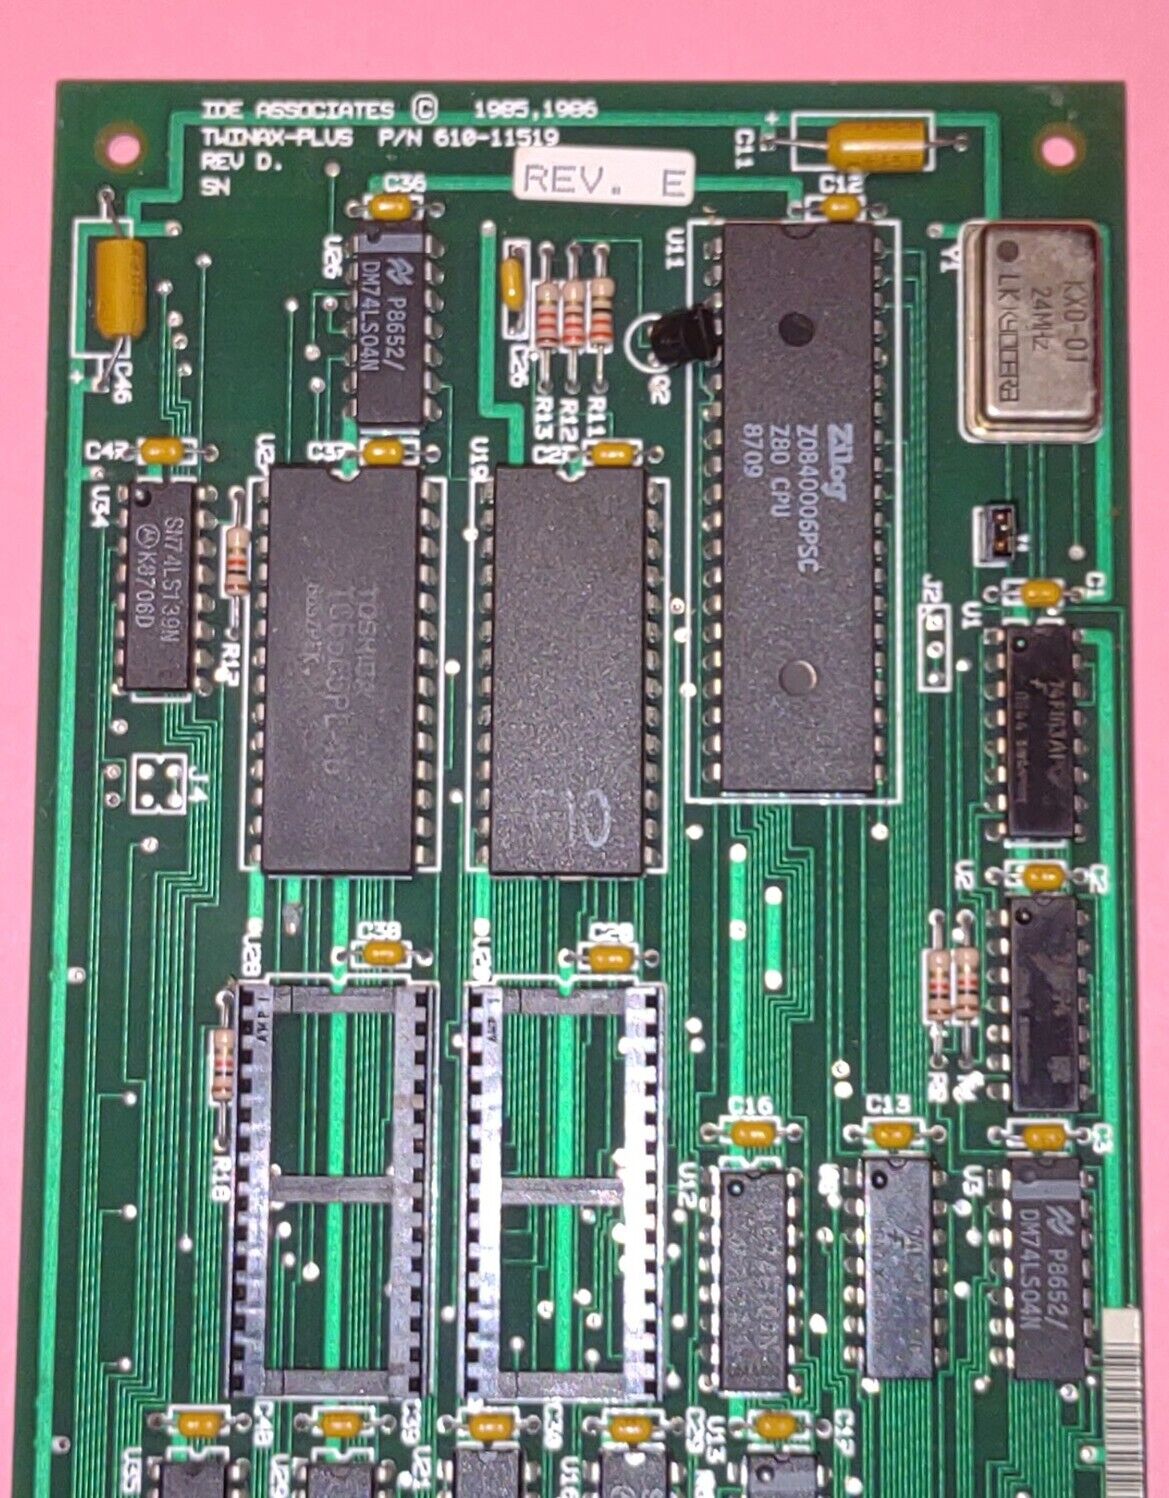 IDE Associates ISA TWINAX-PLUS 8-bit Adapter Card Zilog Z80 CPU 610-11519 rev E